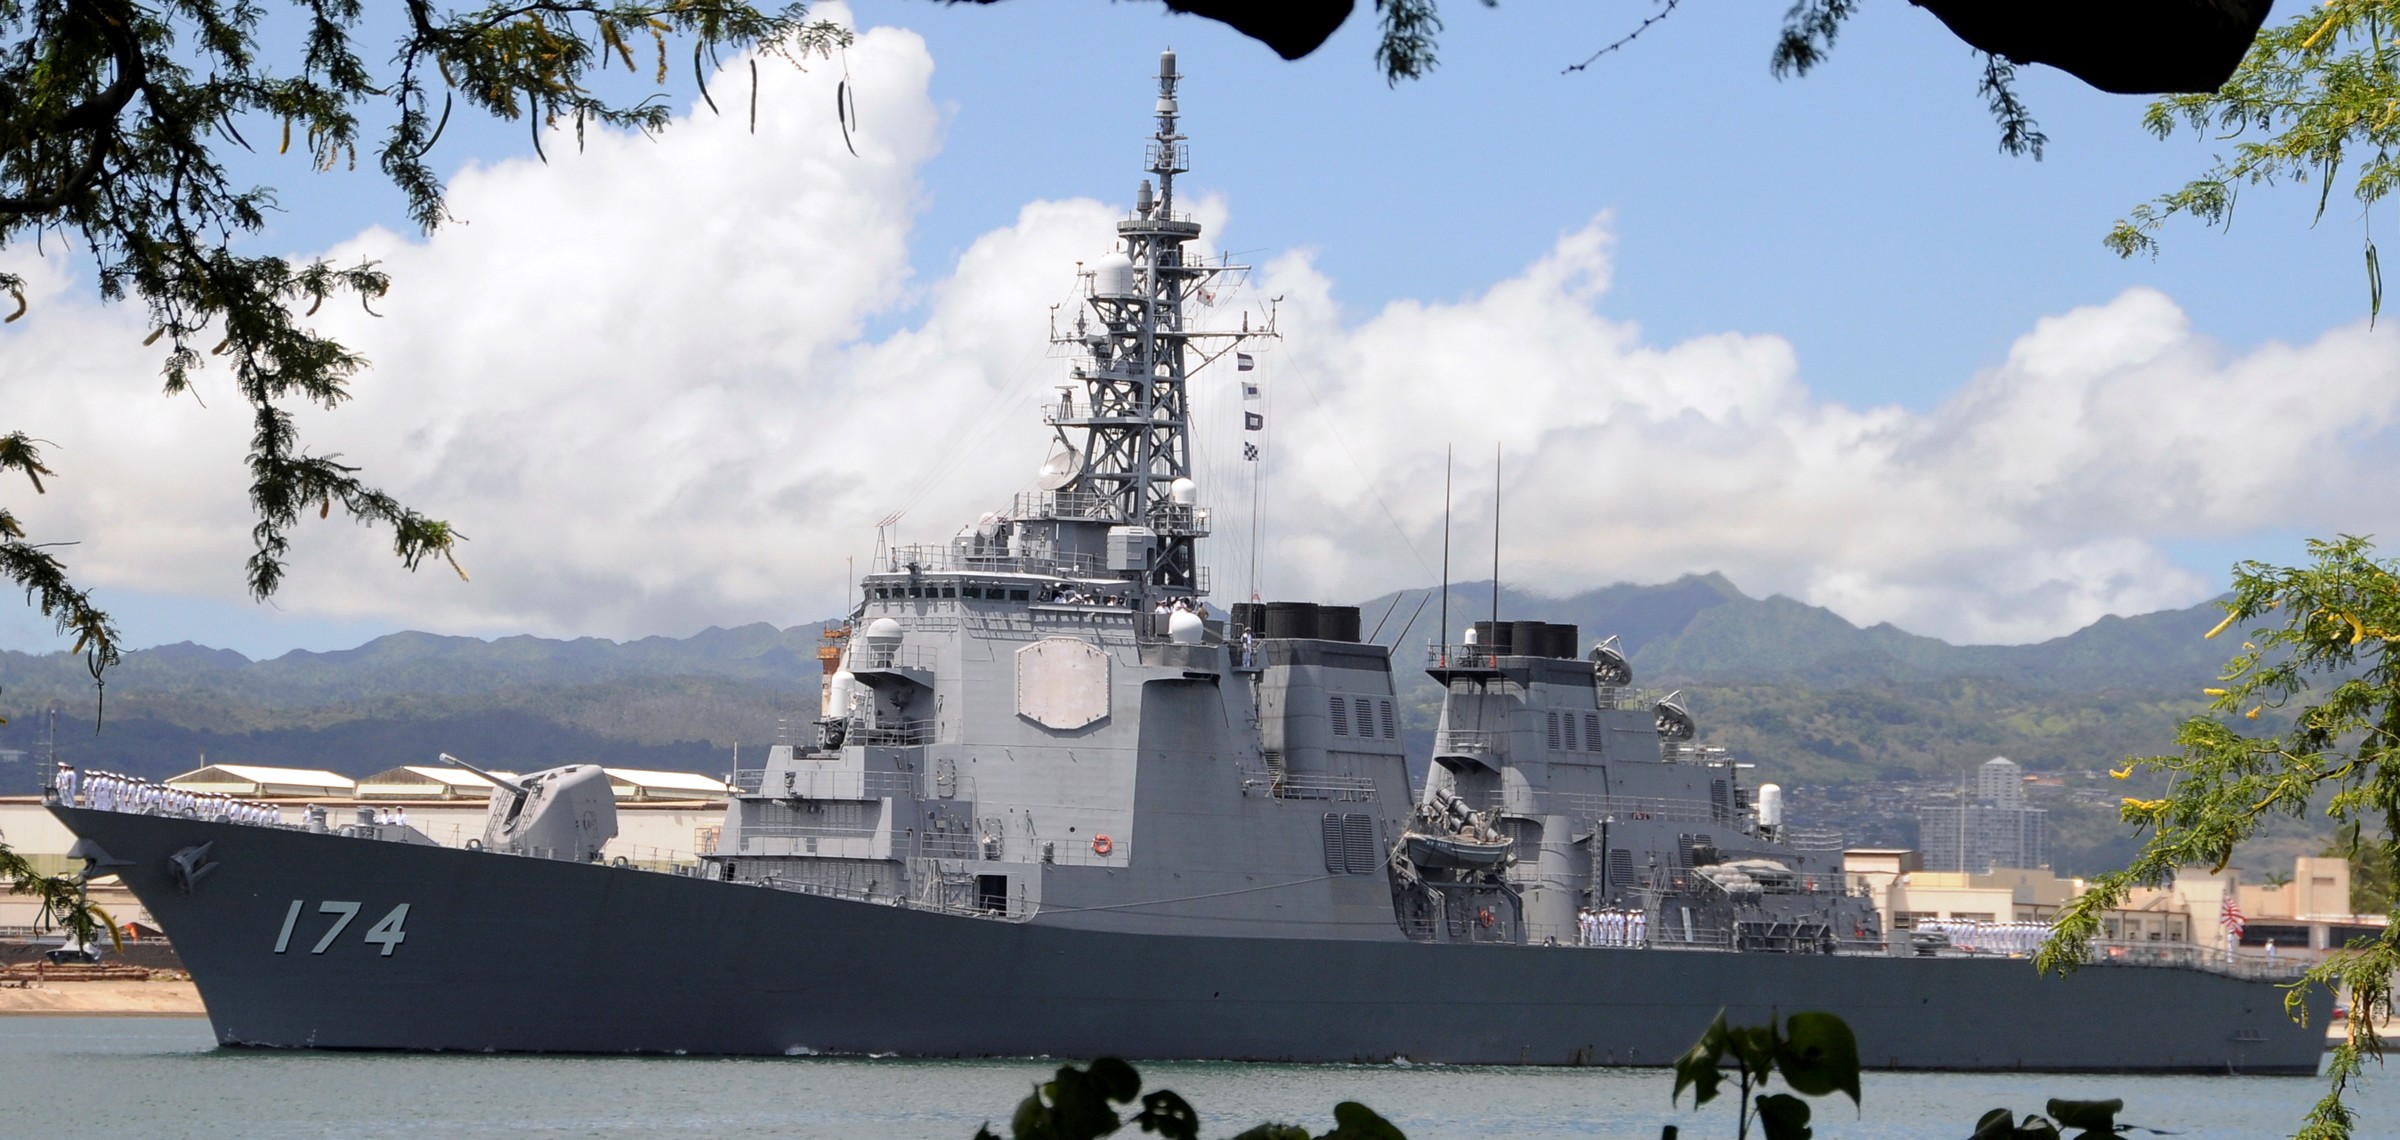 ddg-174 js kirishima kongo class guided missile destroyer aegis japan maritime self defense force jmsdf 22x mitsubishi yokosuka